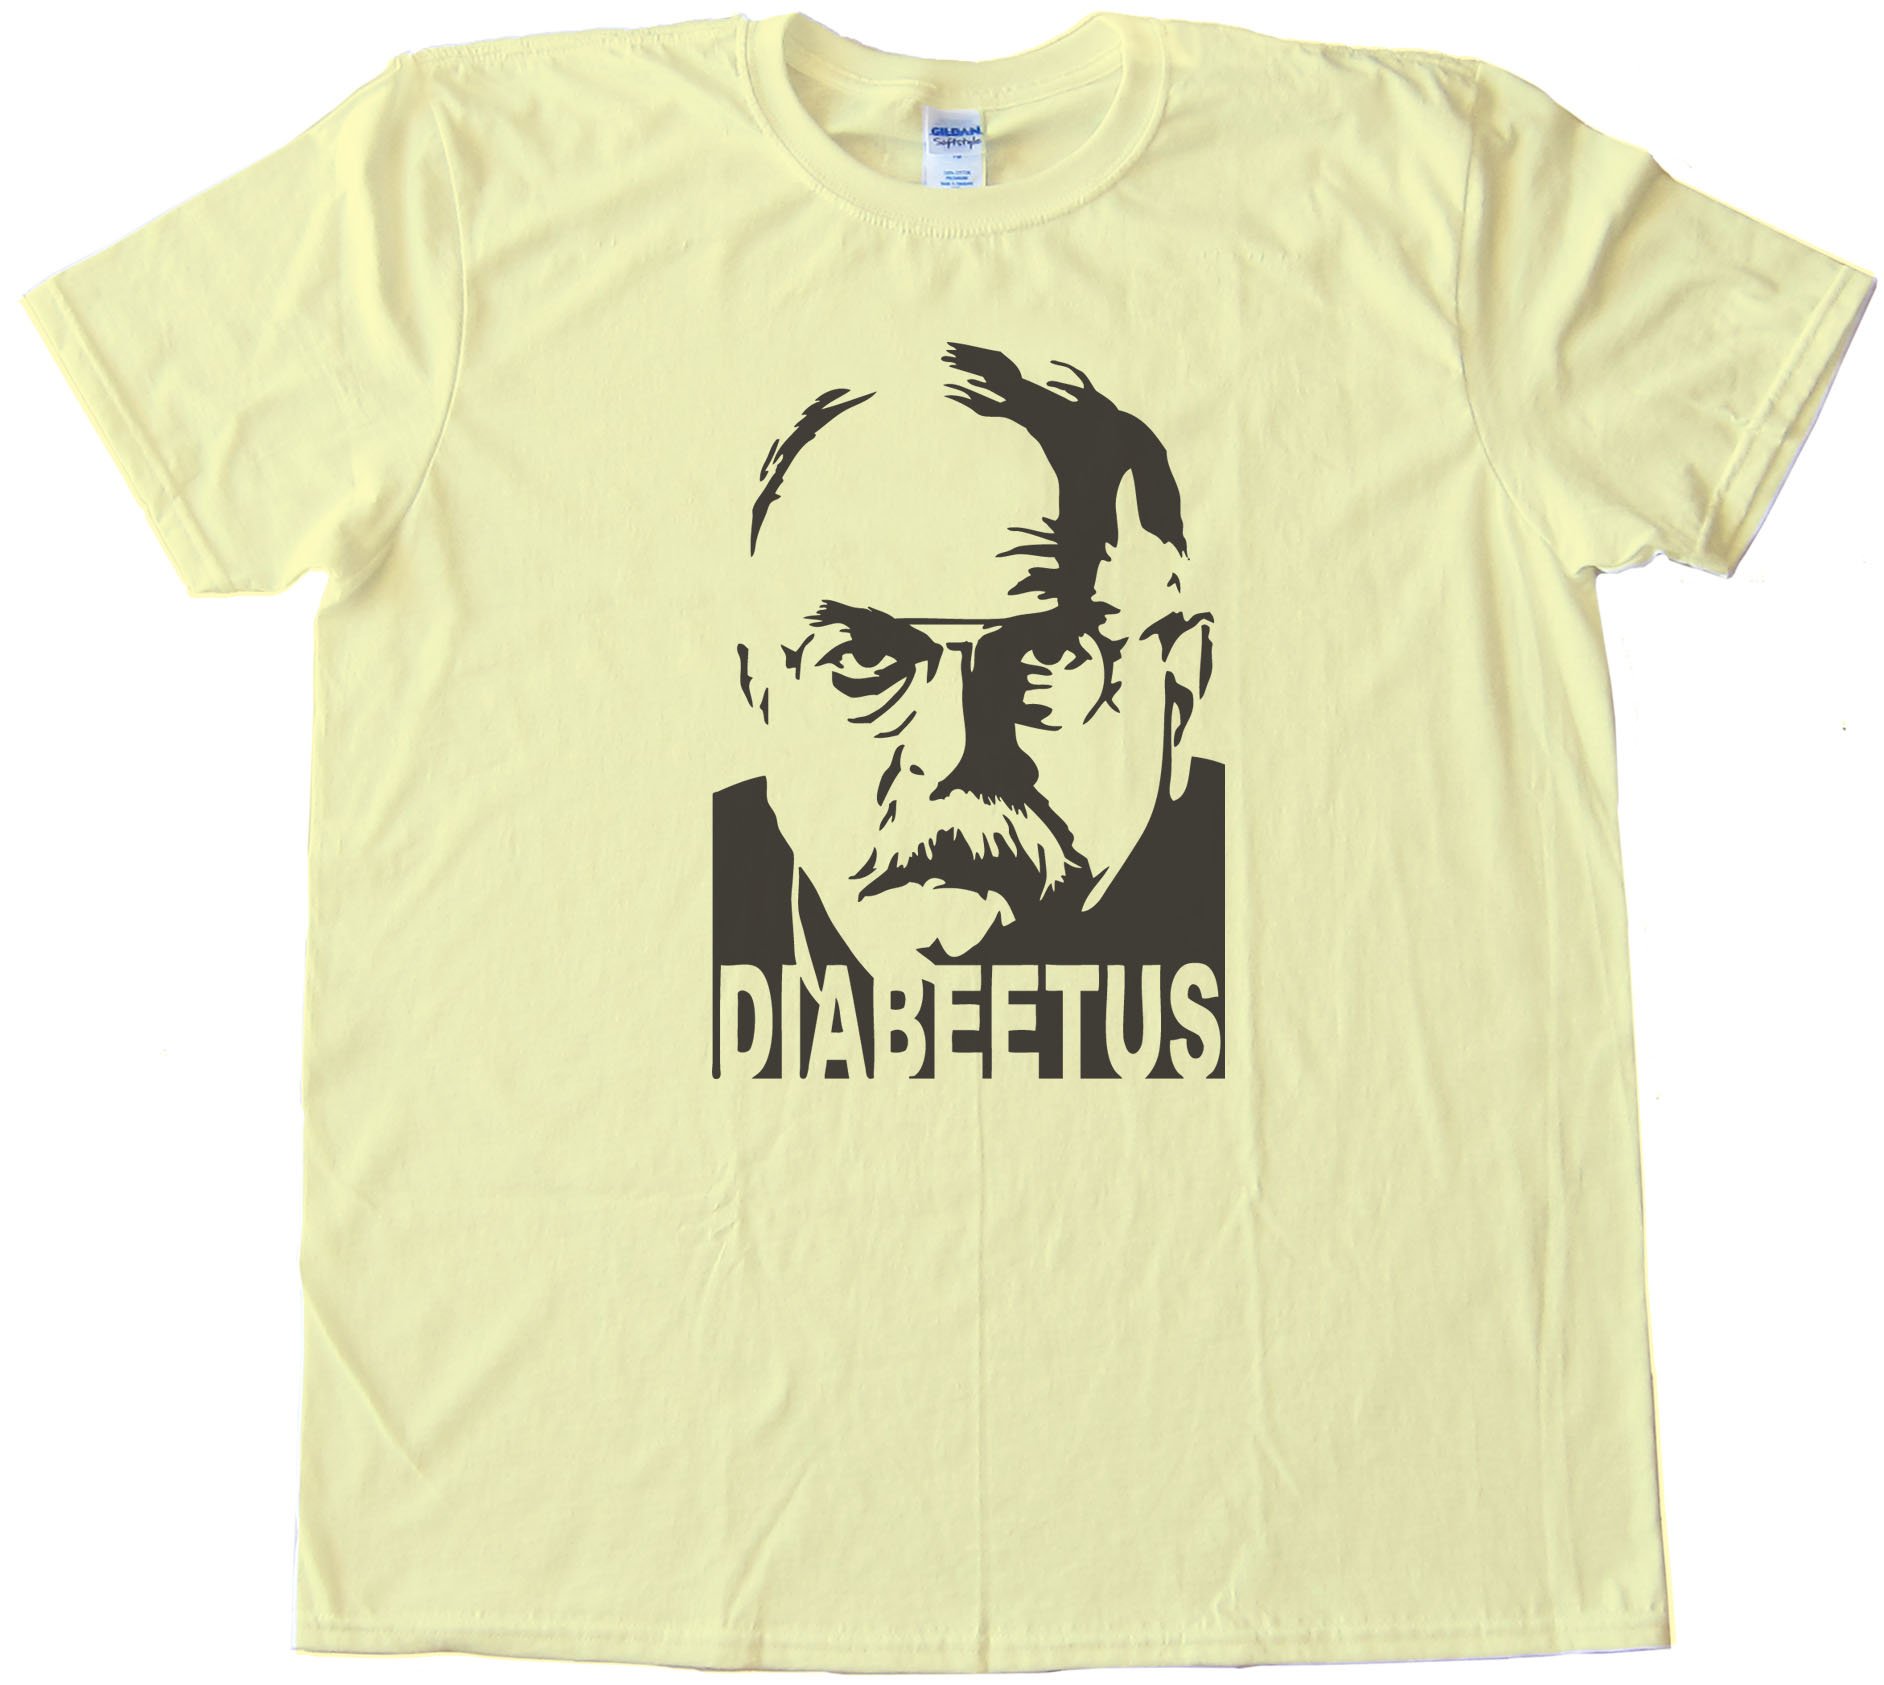 Diabeetus - Wilford Brimley Tee Shirt